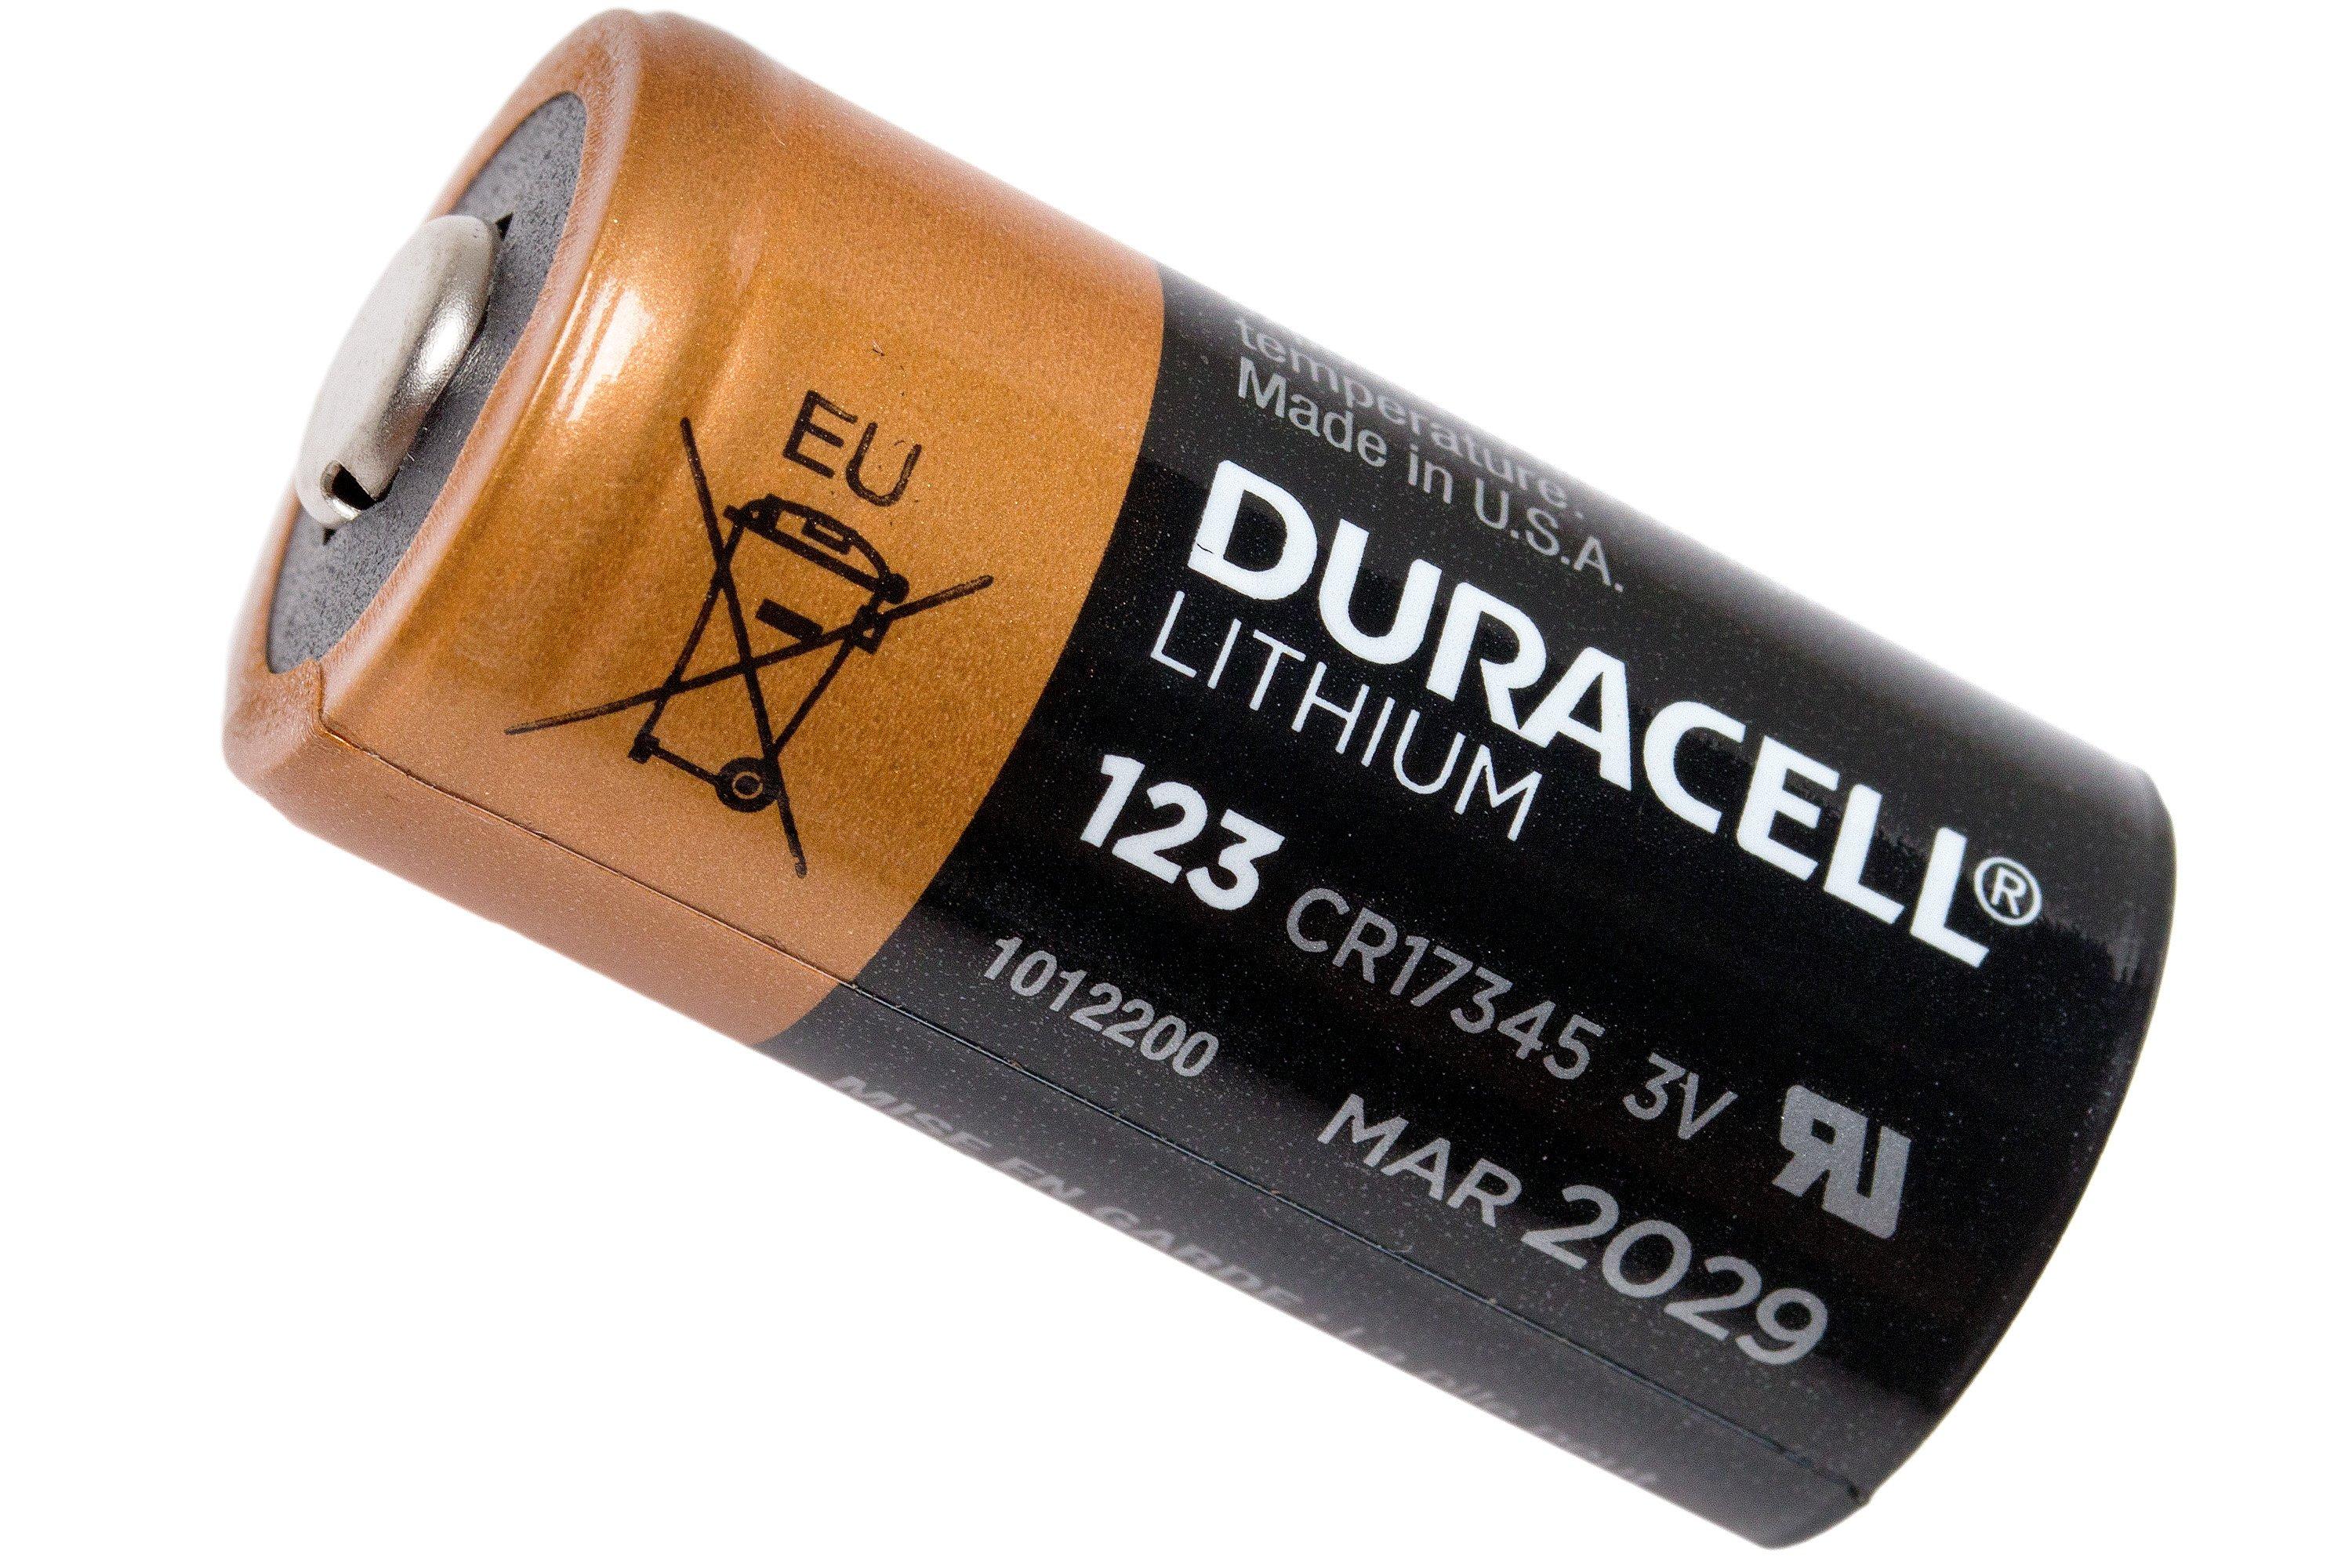 Duracell CR123A pilas, 2 unidades  Compras con ventajas en